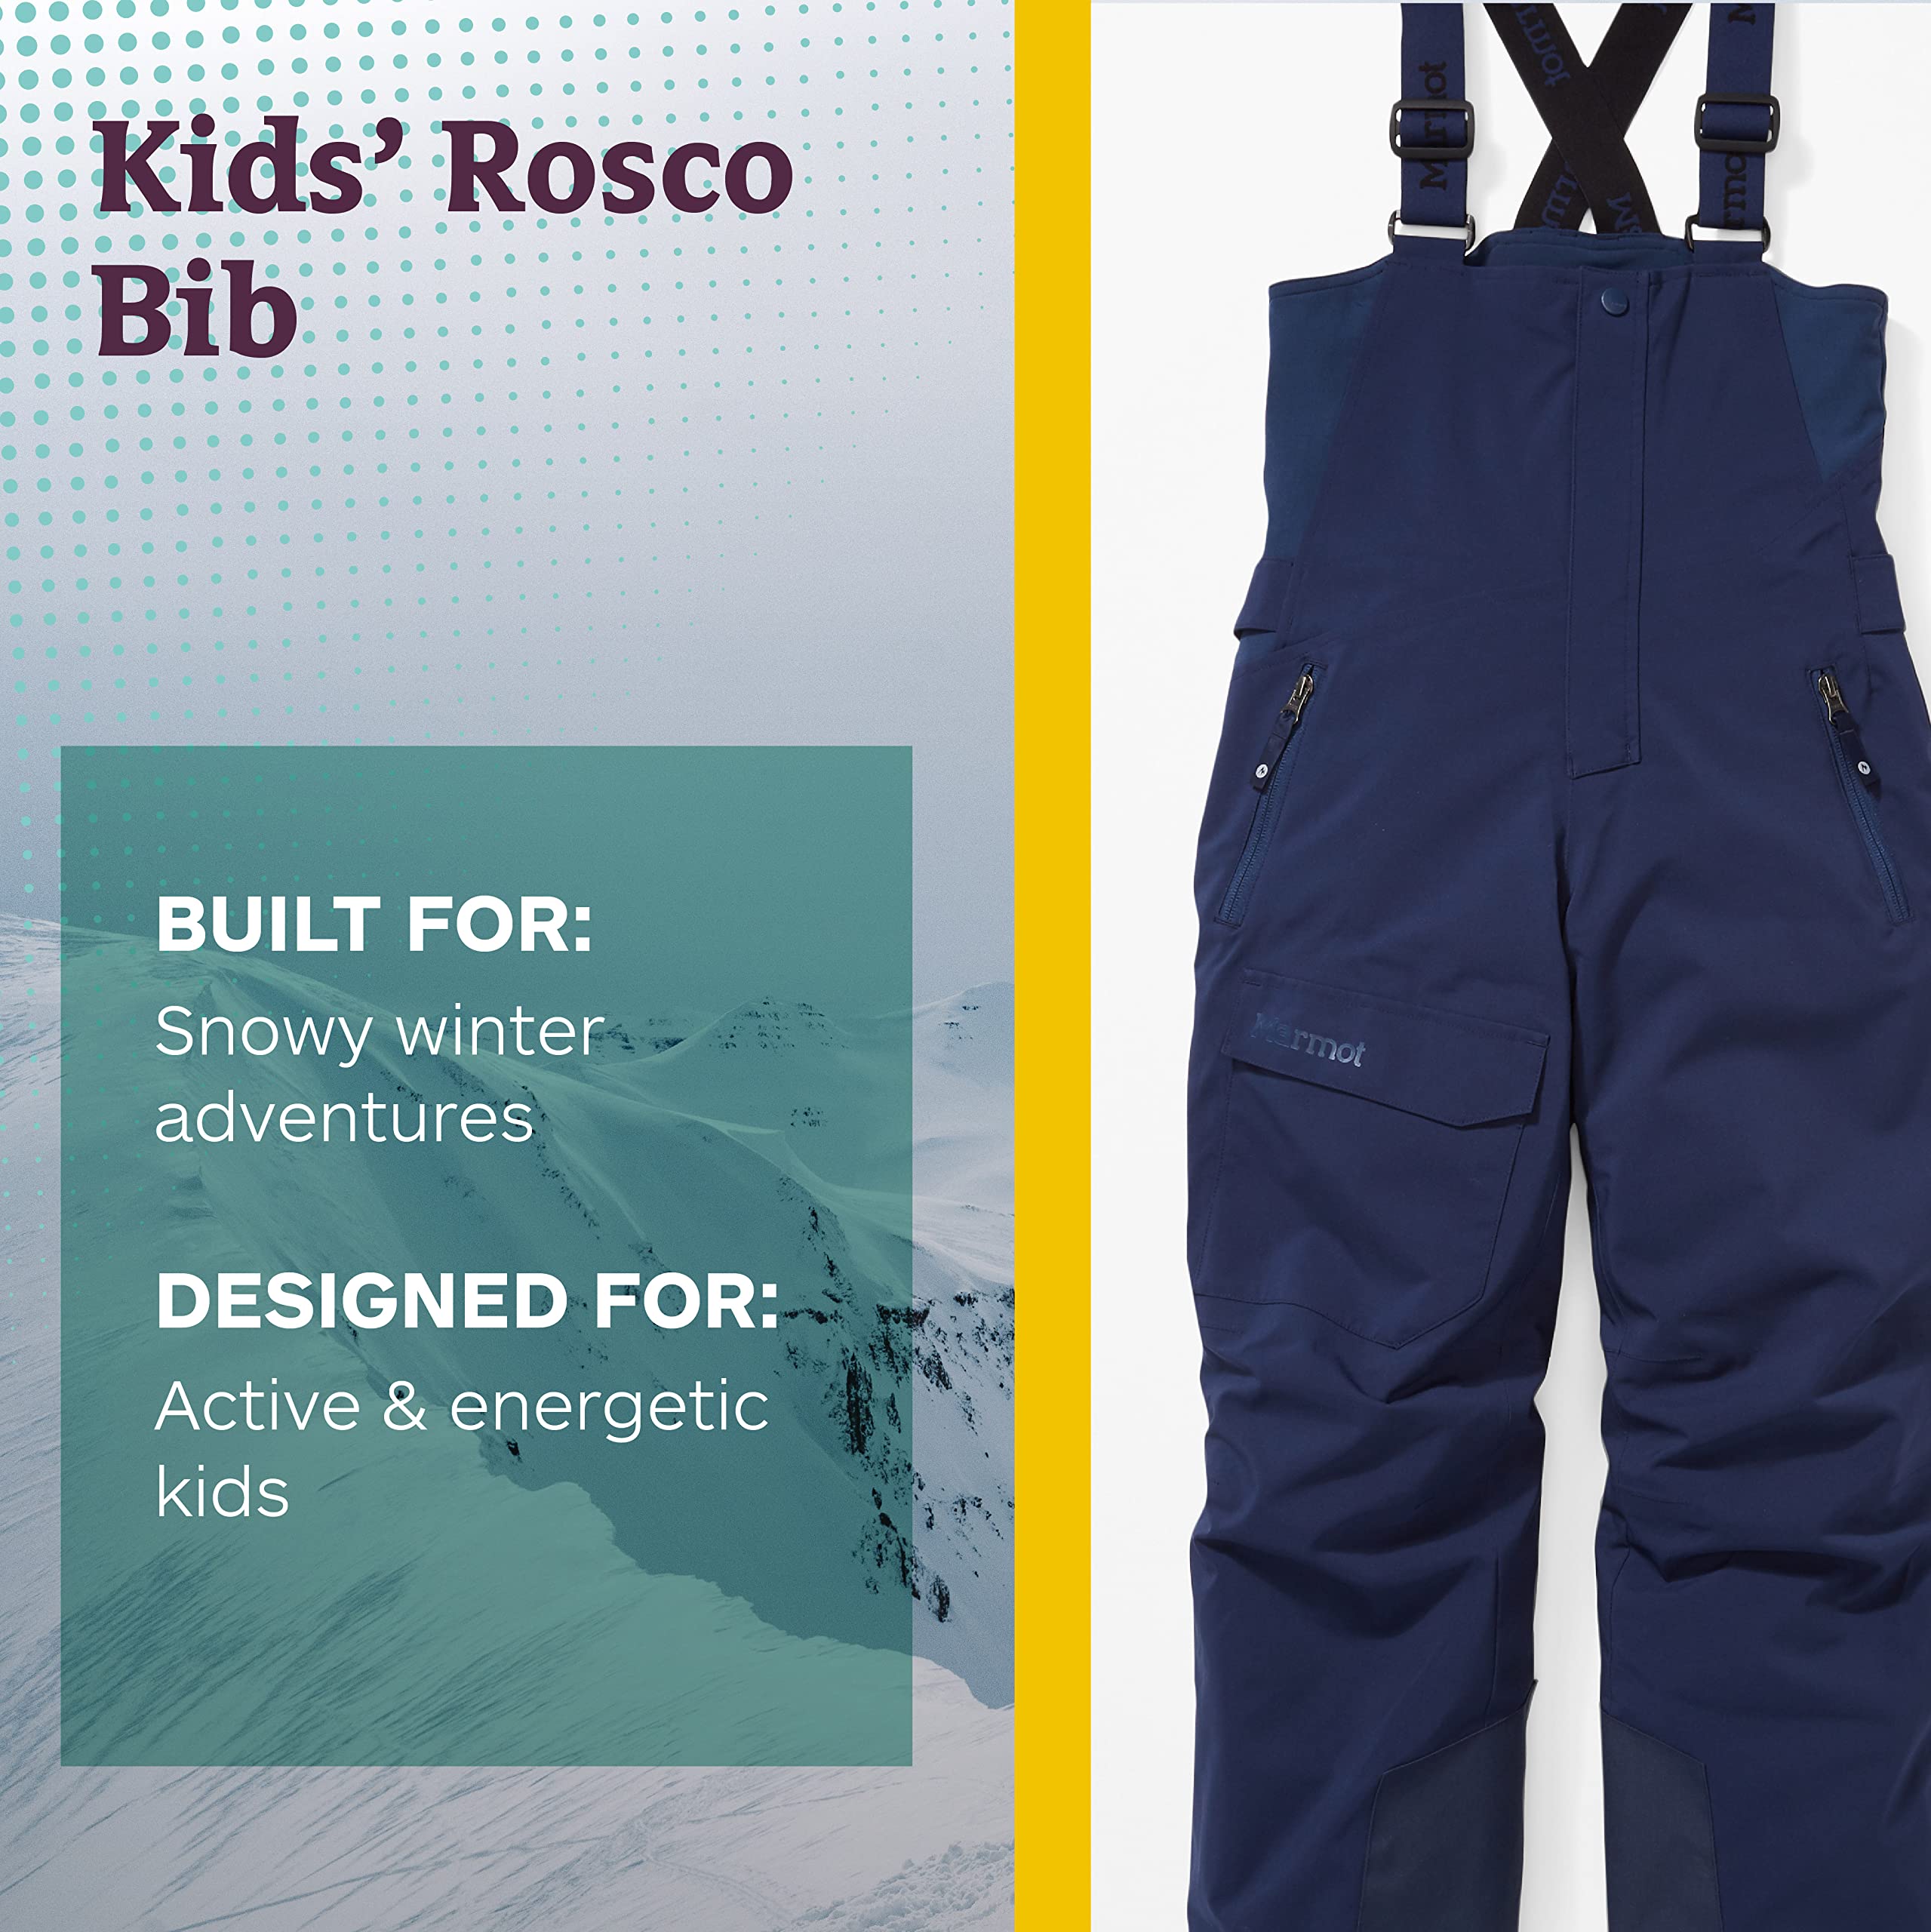 MARMOT Kid's Rosco Bib - Snow Pants for Kids, Winter Pants for Skiing, Snowboarding, School, and Winter Play